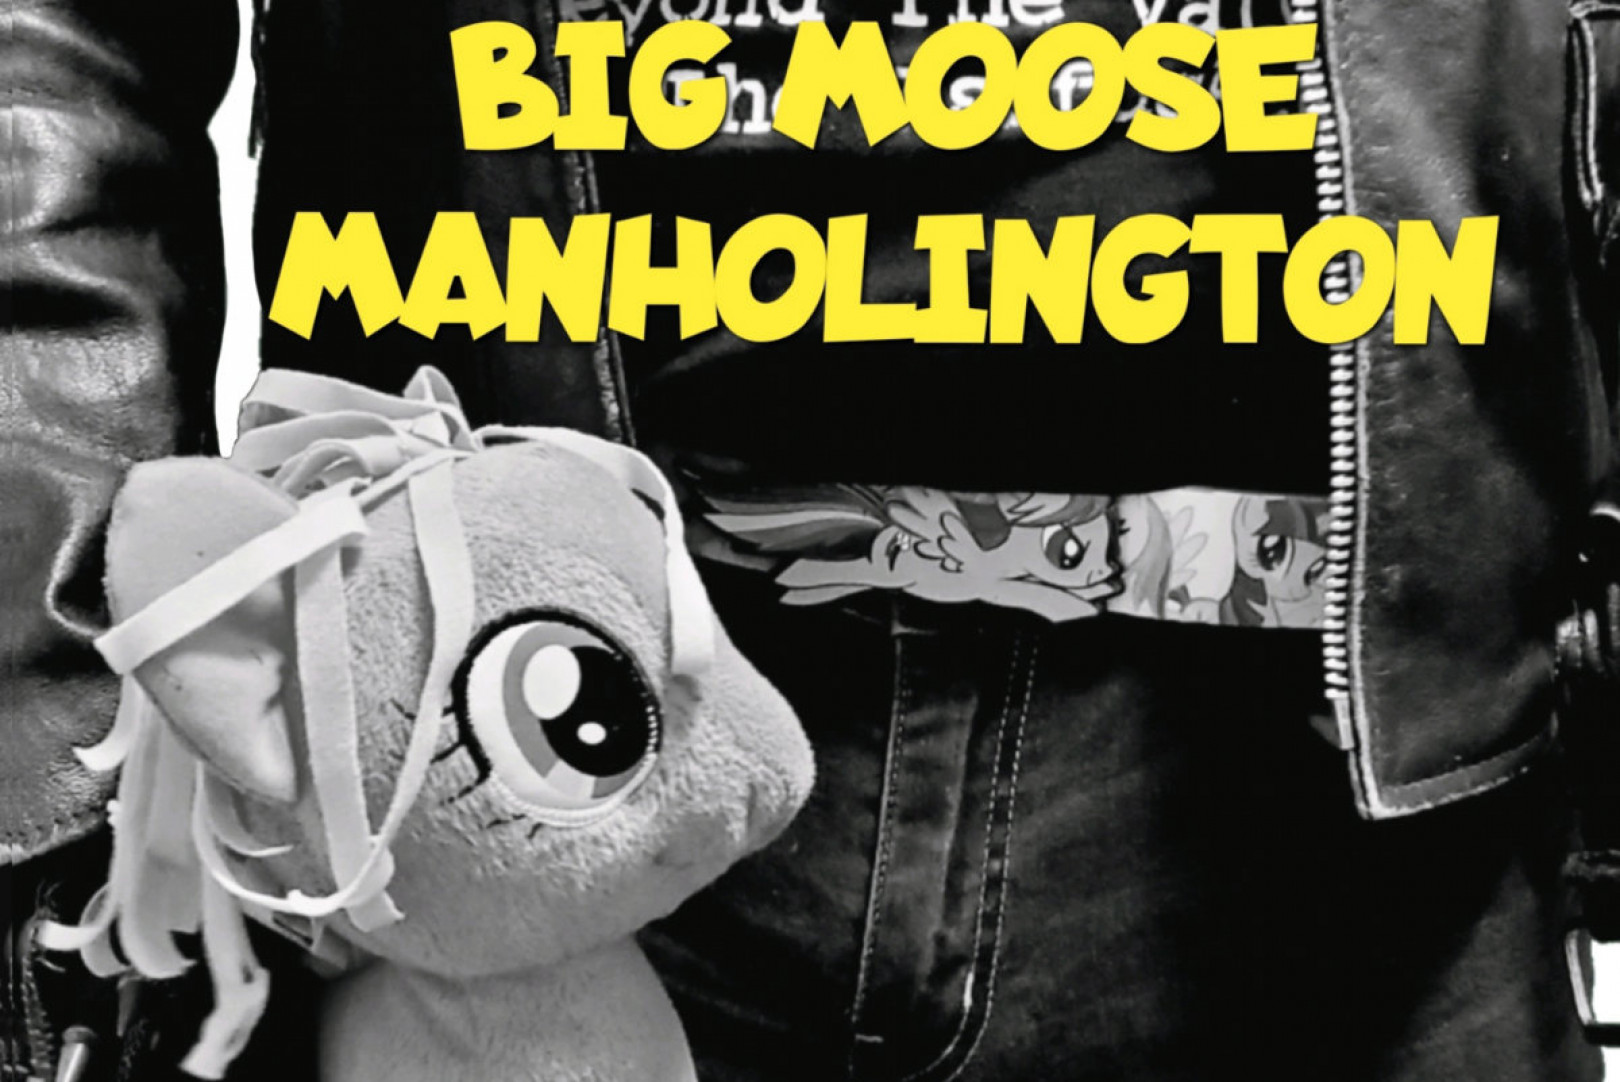 Big Moose Manholington releases new tape